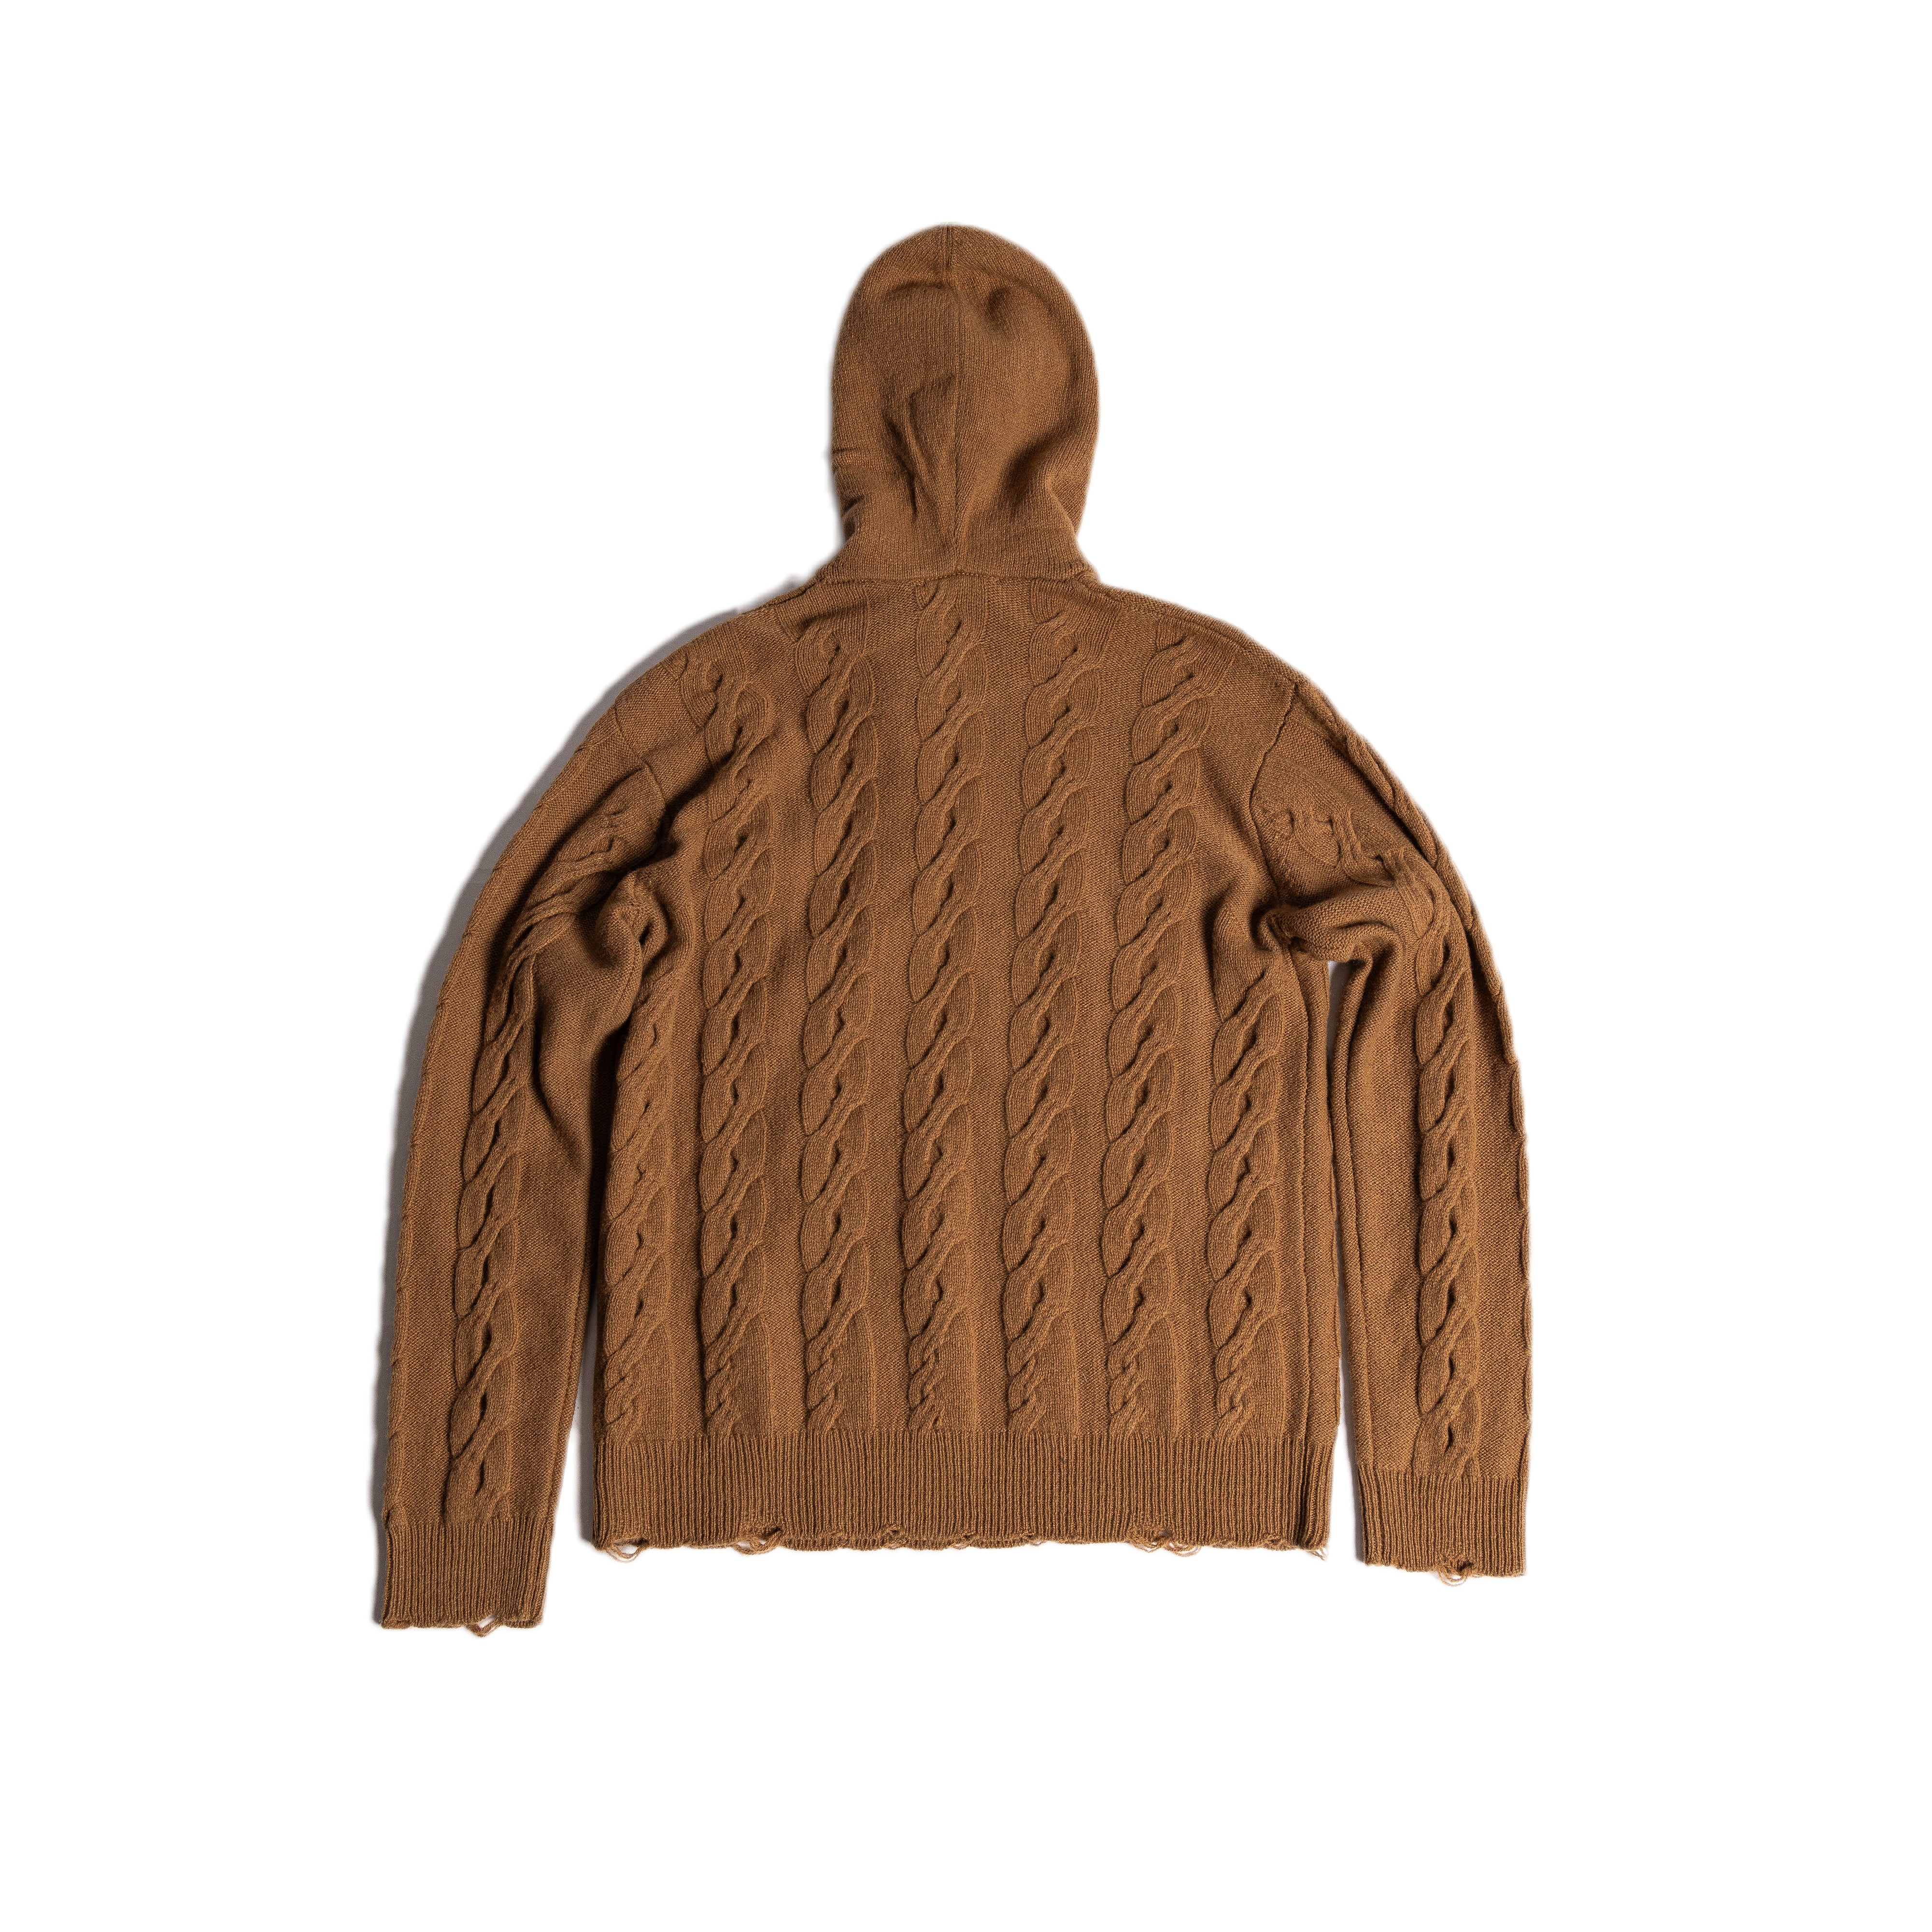 Atomo Knit Hooded Sweatshirt